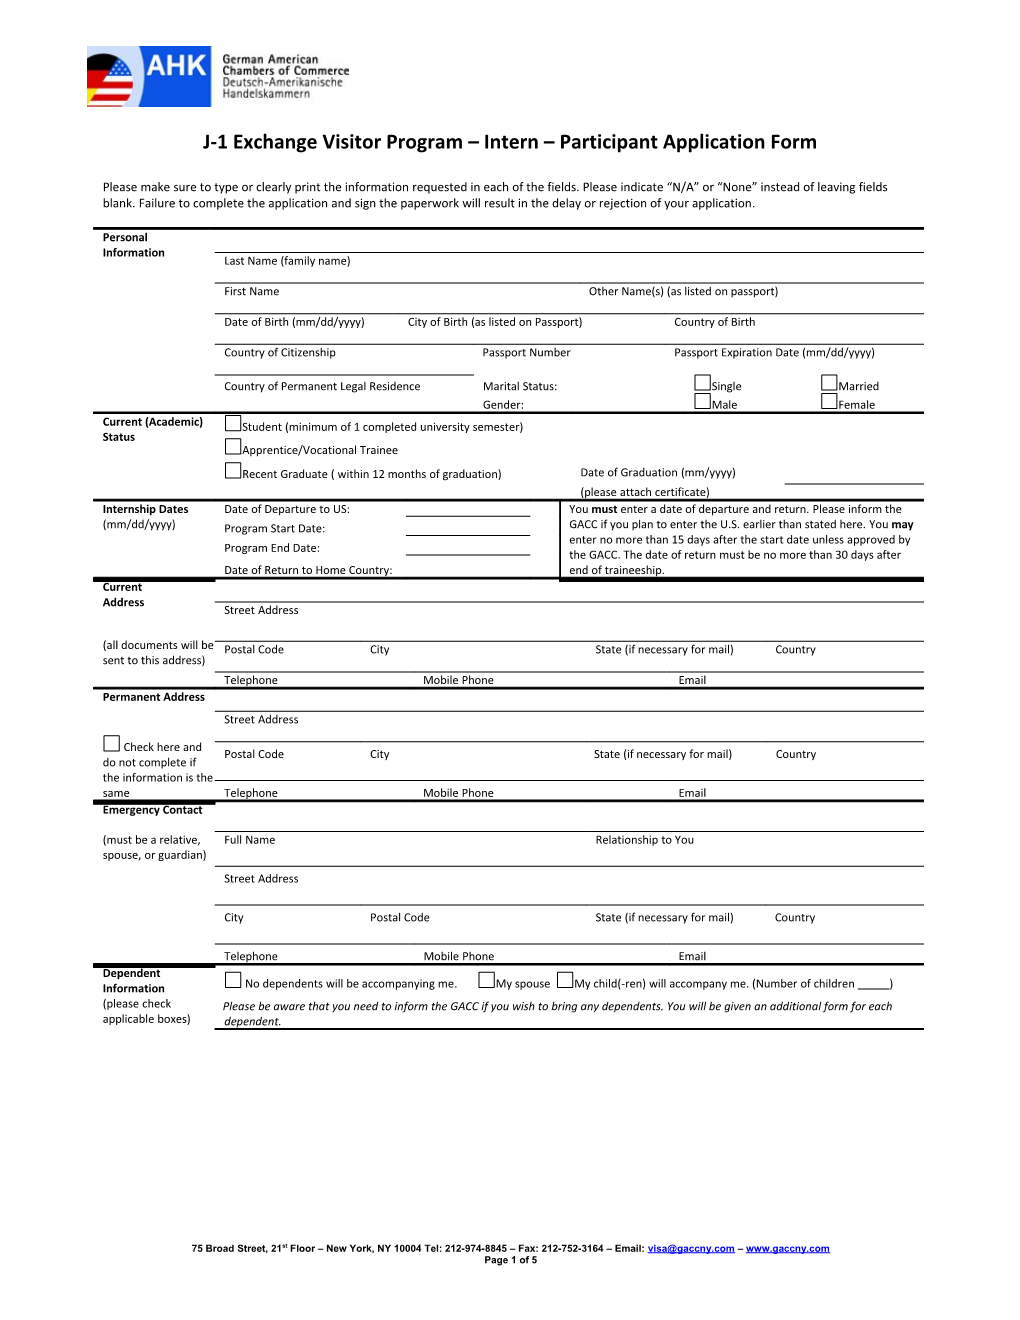 J-1 Exchange Visitor Program Intern Participant Application Form